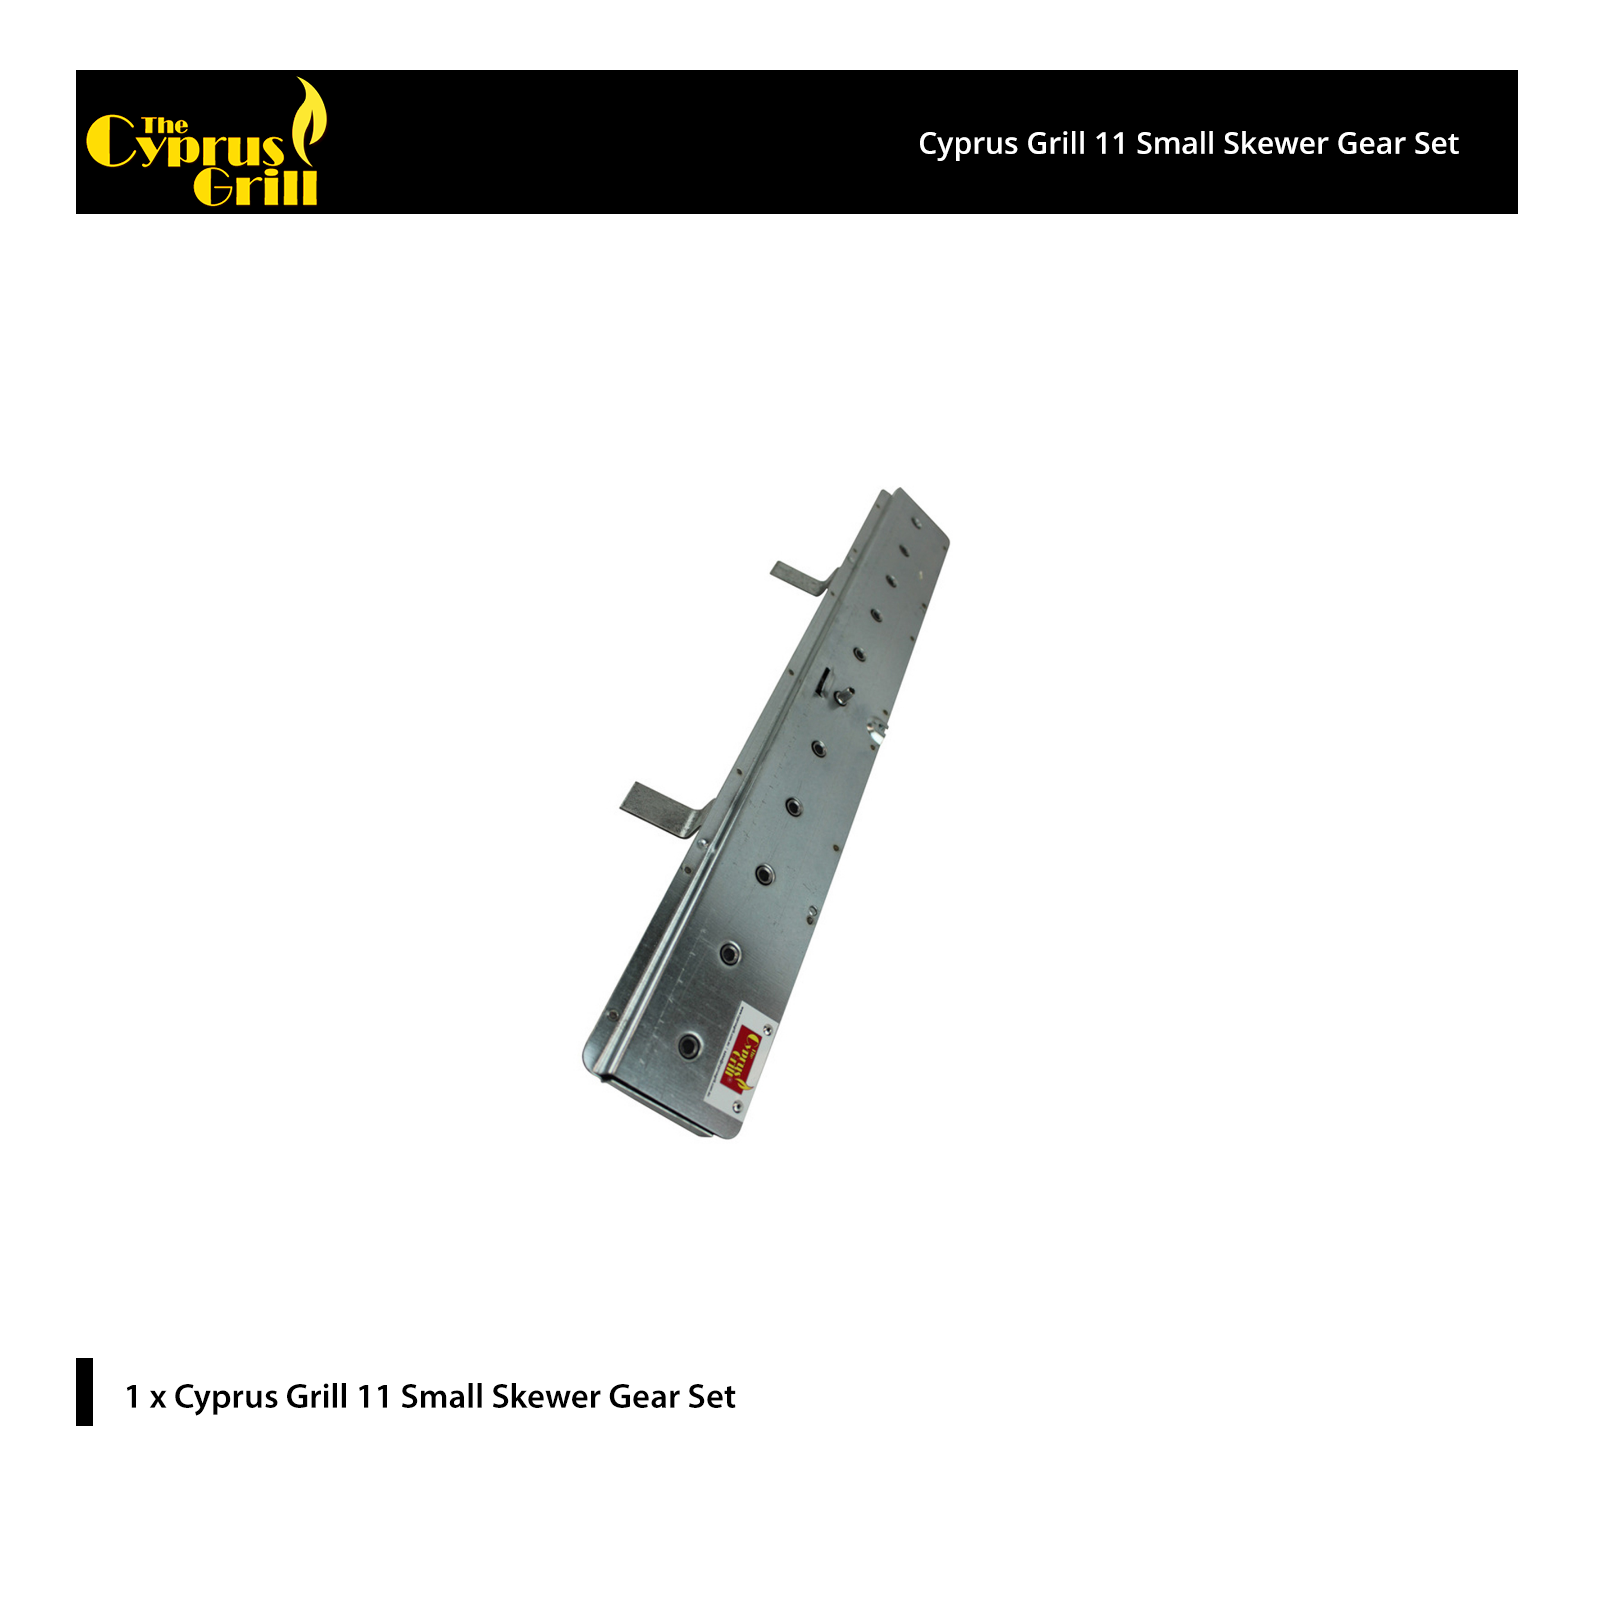 Cyprus Grill - 11 Small Skewer Gear Set